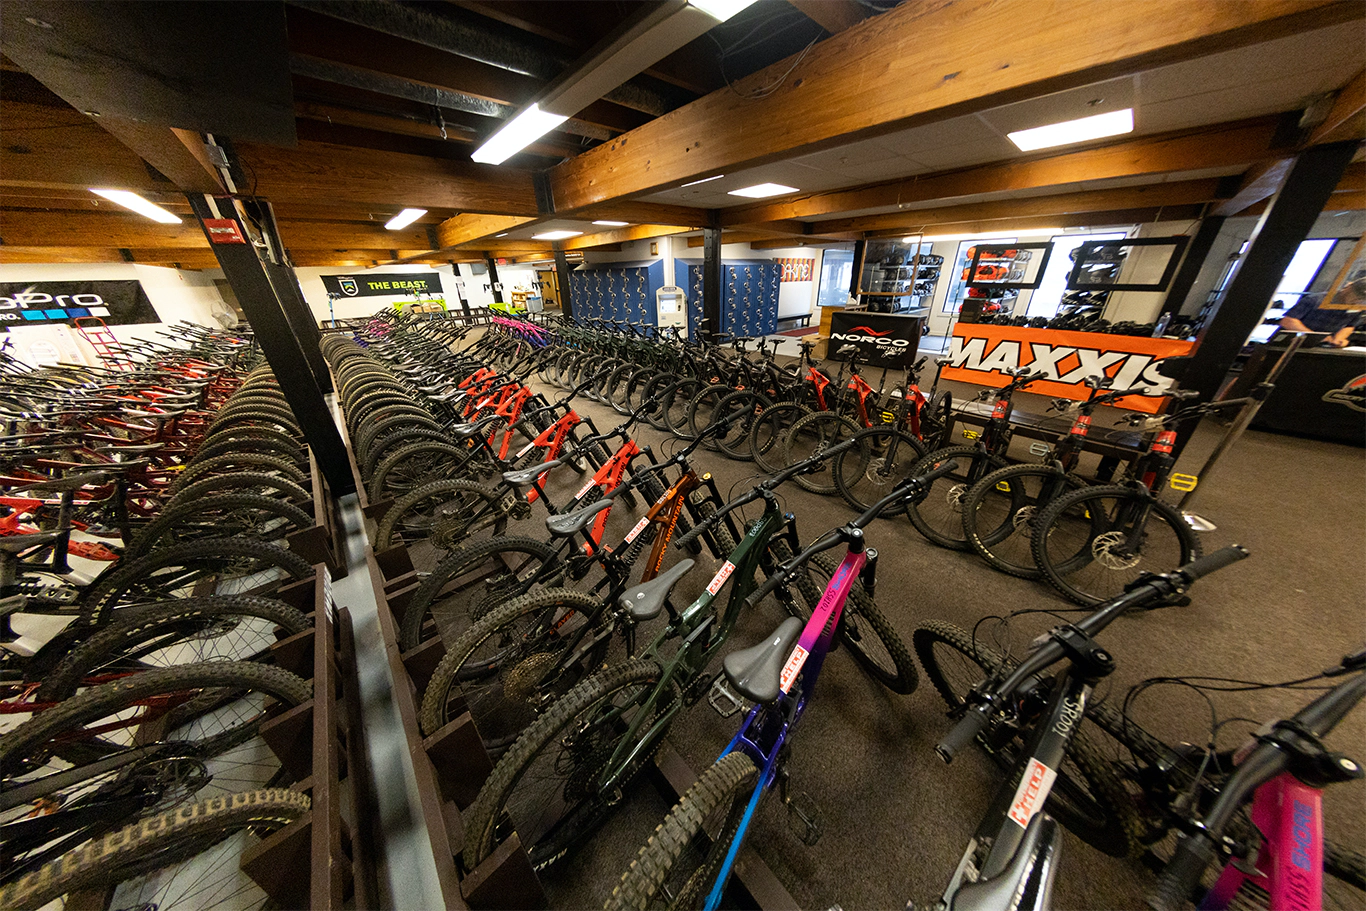 Killington Bike Park - Bike Shop and Rentals